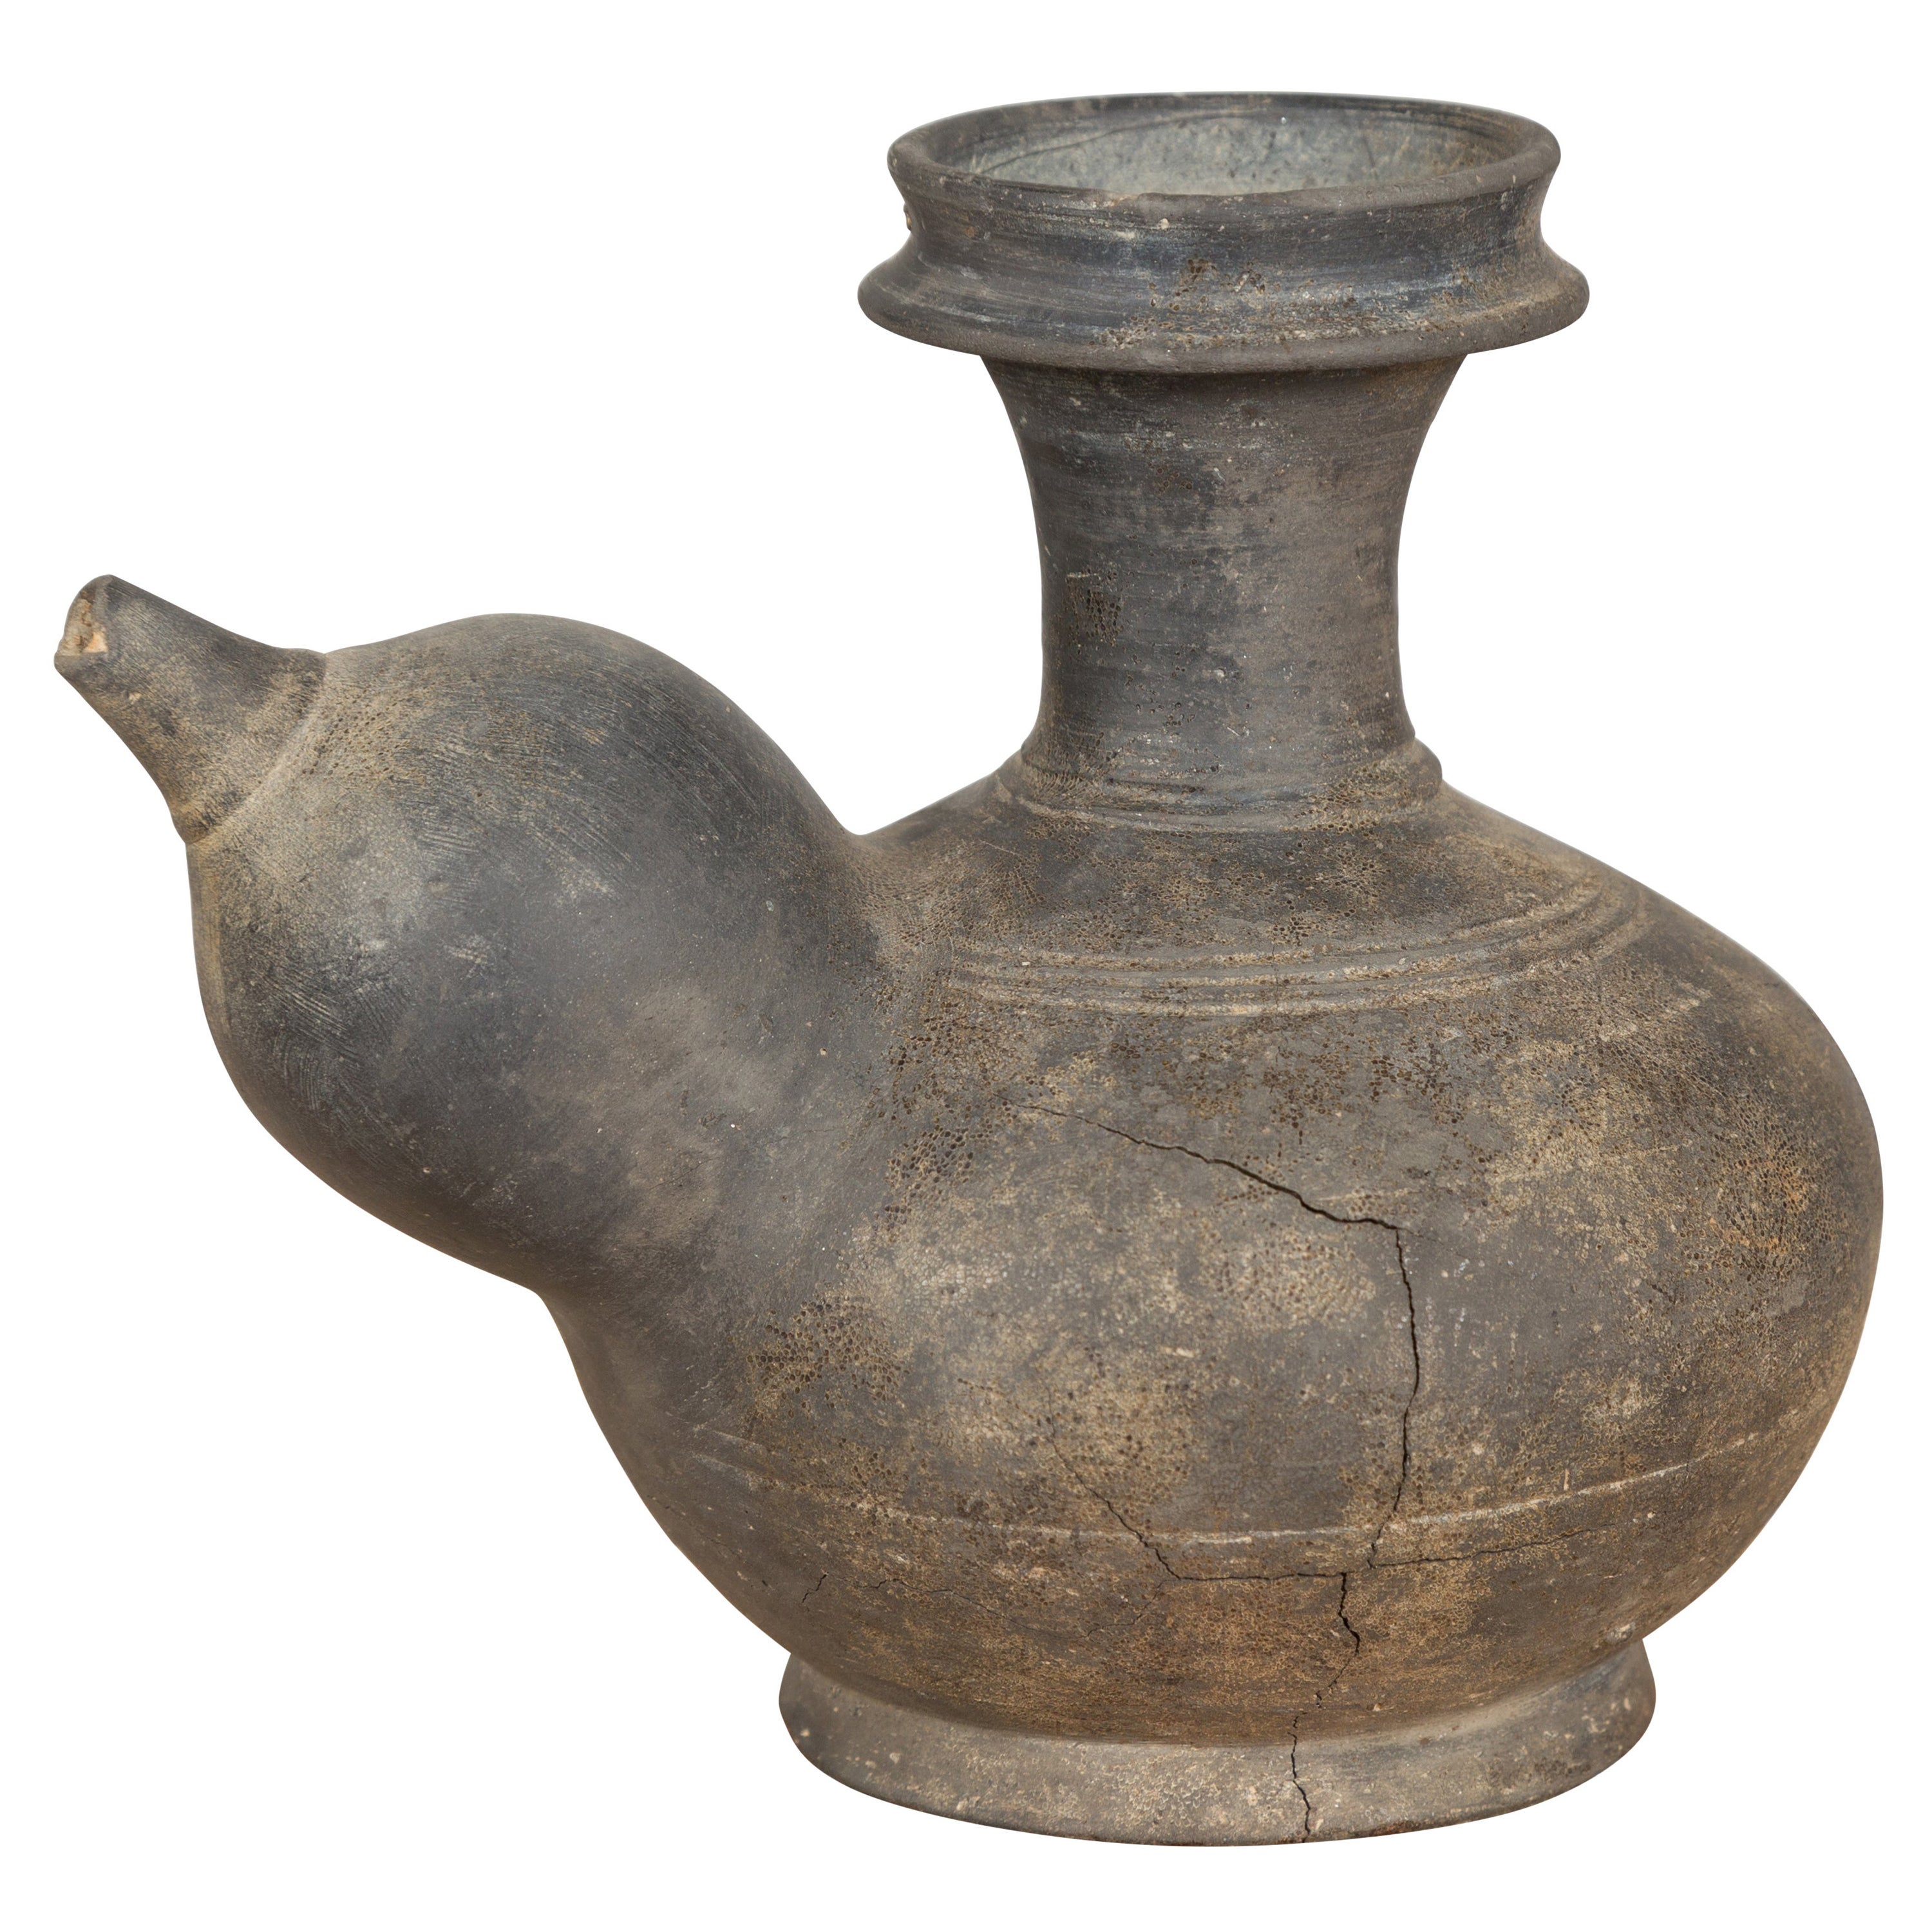 Chinese Ming Dynasty 17th Century Earthenware Ewer Kendi Ritual Water Vessel